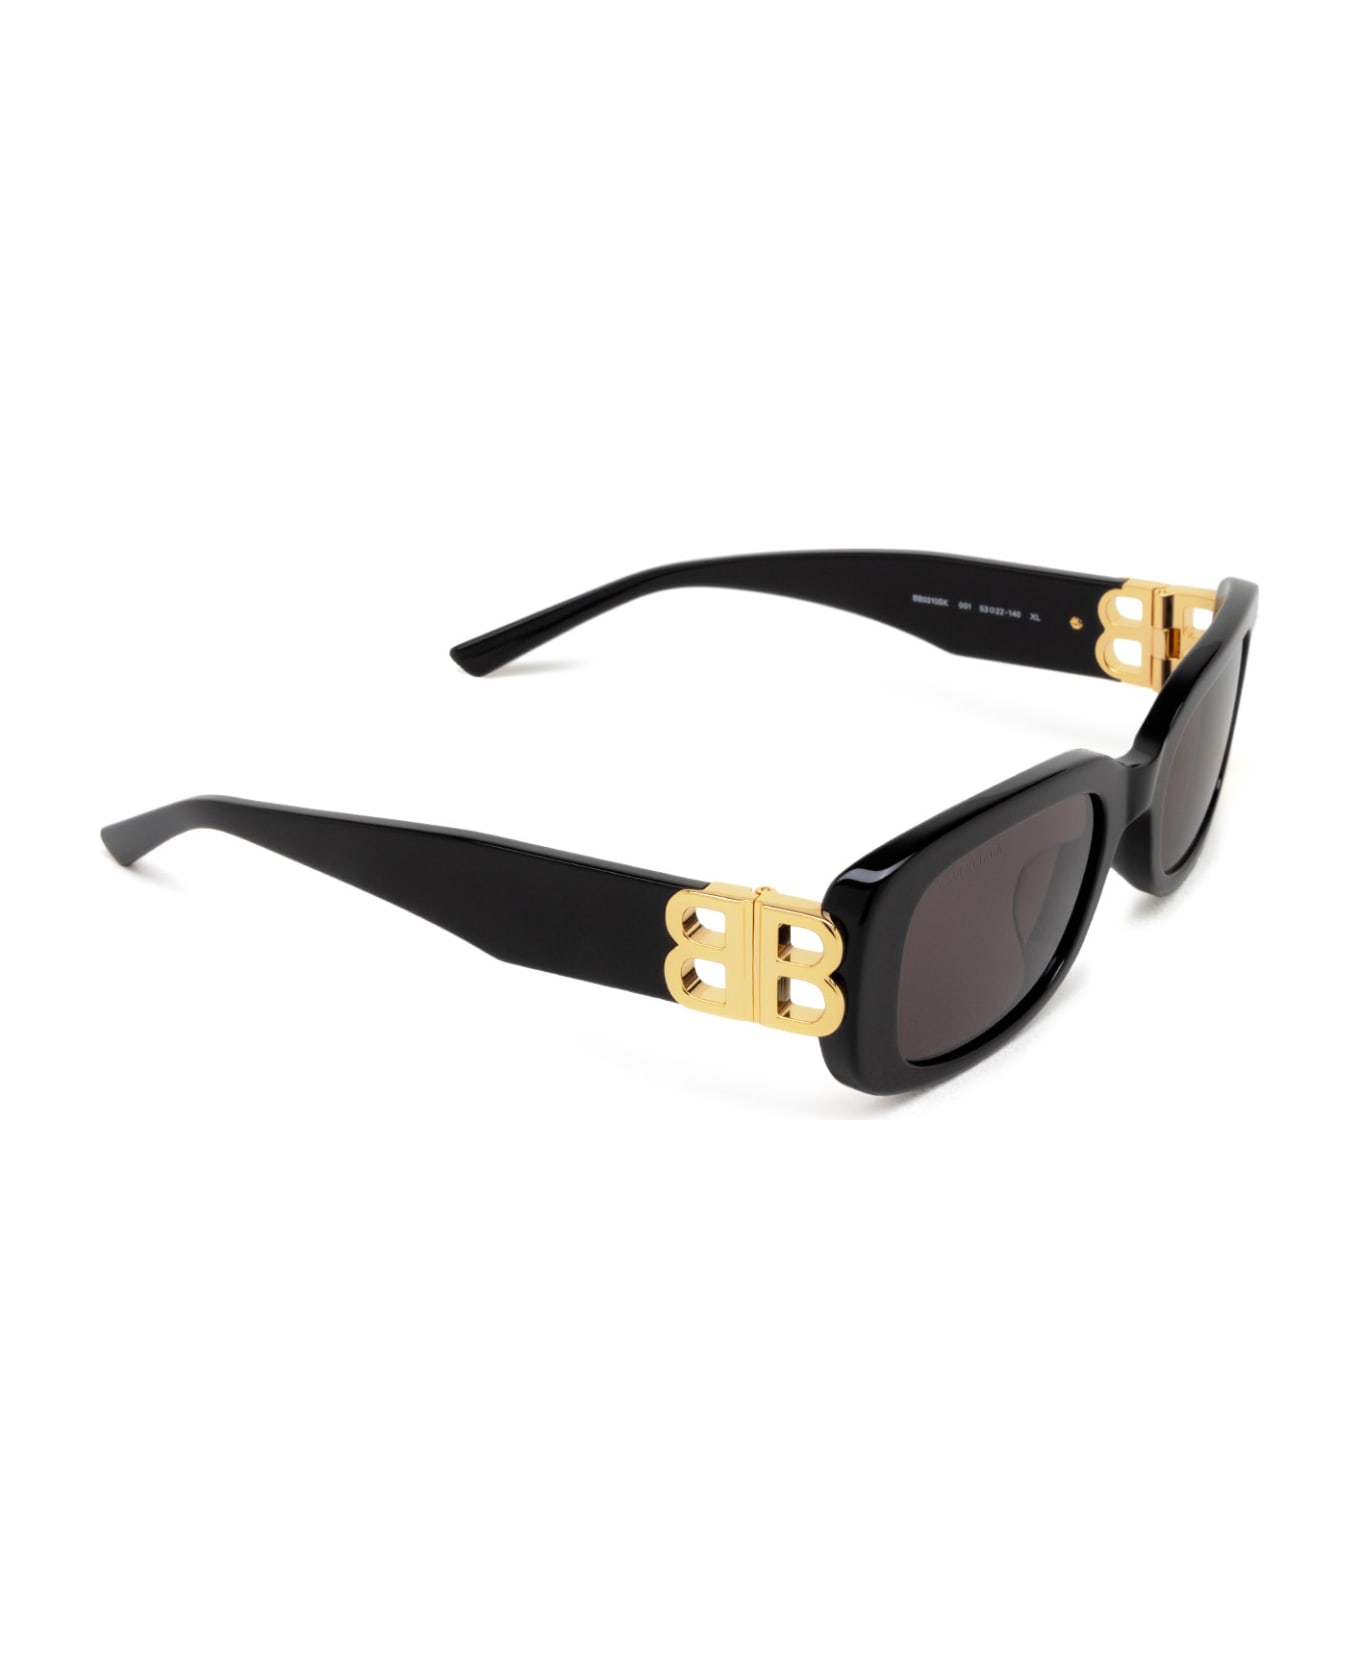 Balenciaga Eyewear Bb0310sk 001 Sunglasses Sunglasses - Black